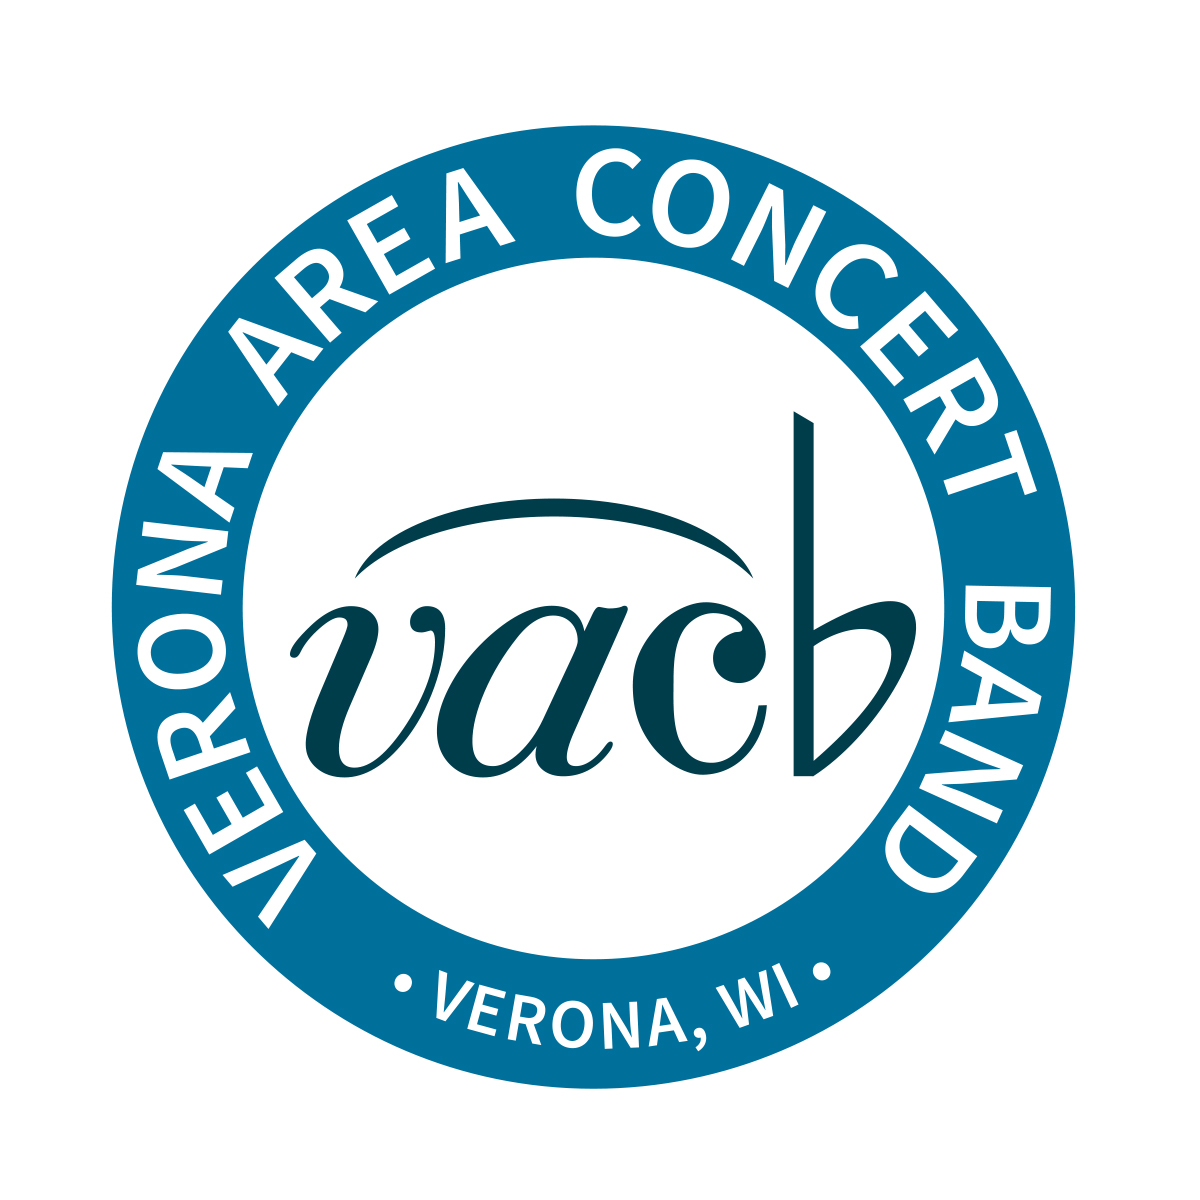 VACB Logo Redesign